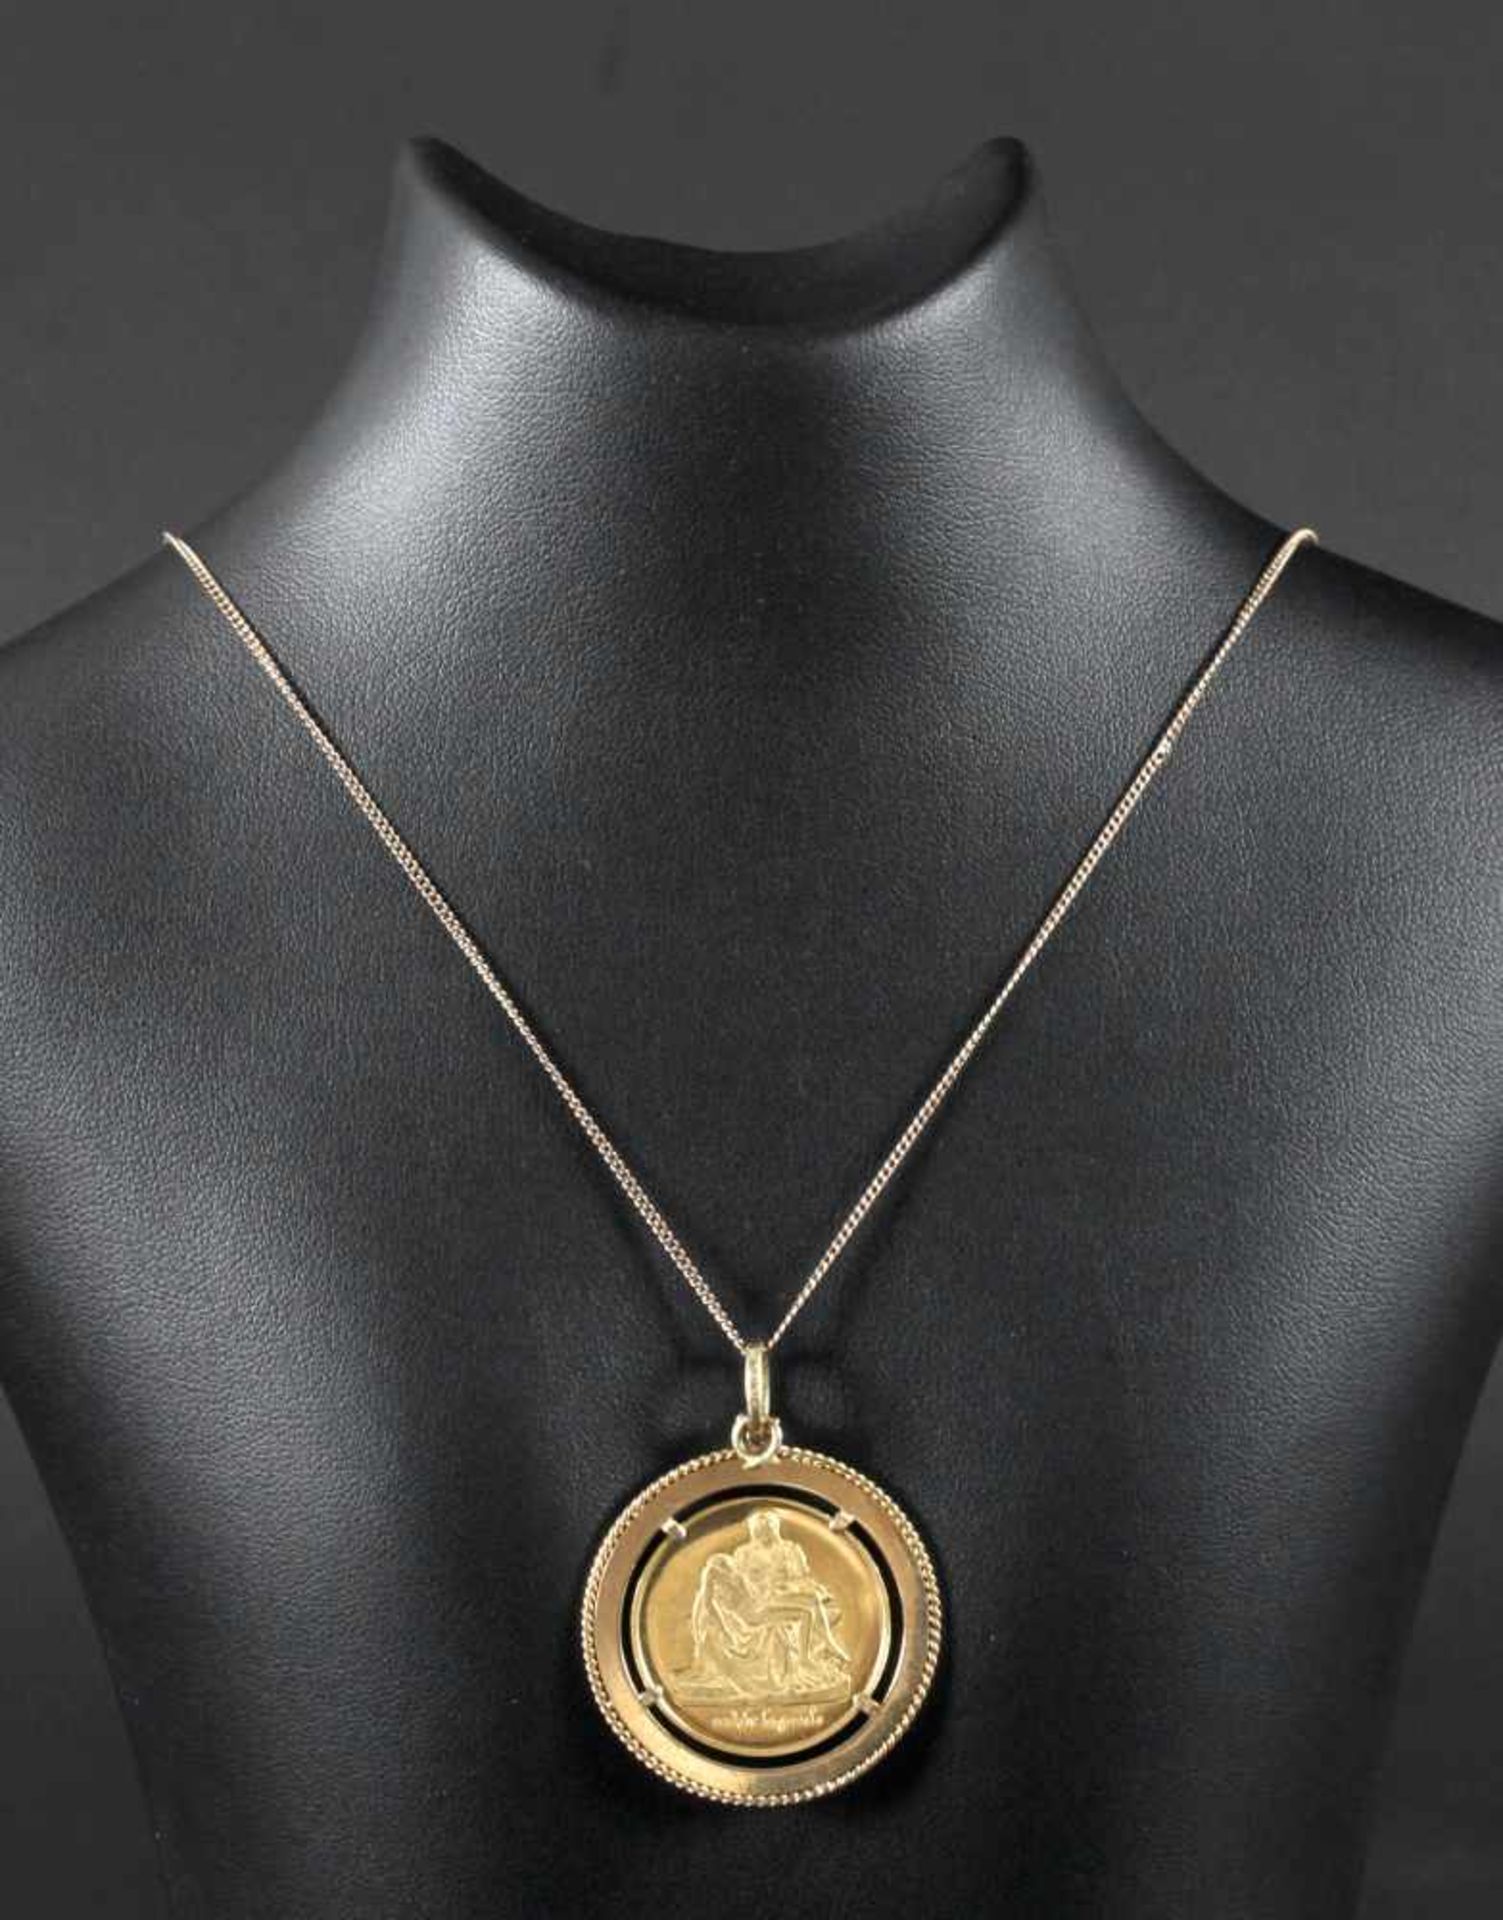 Anhänger mit Medaille New York World´s Fair 1964-65, 750er GG, 12,6 gan Kette aus 333er Gold (2,6